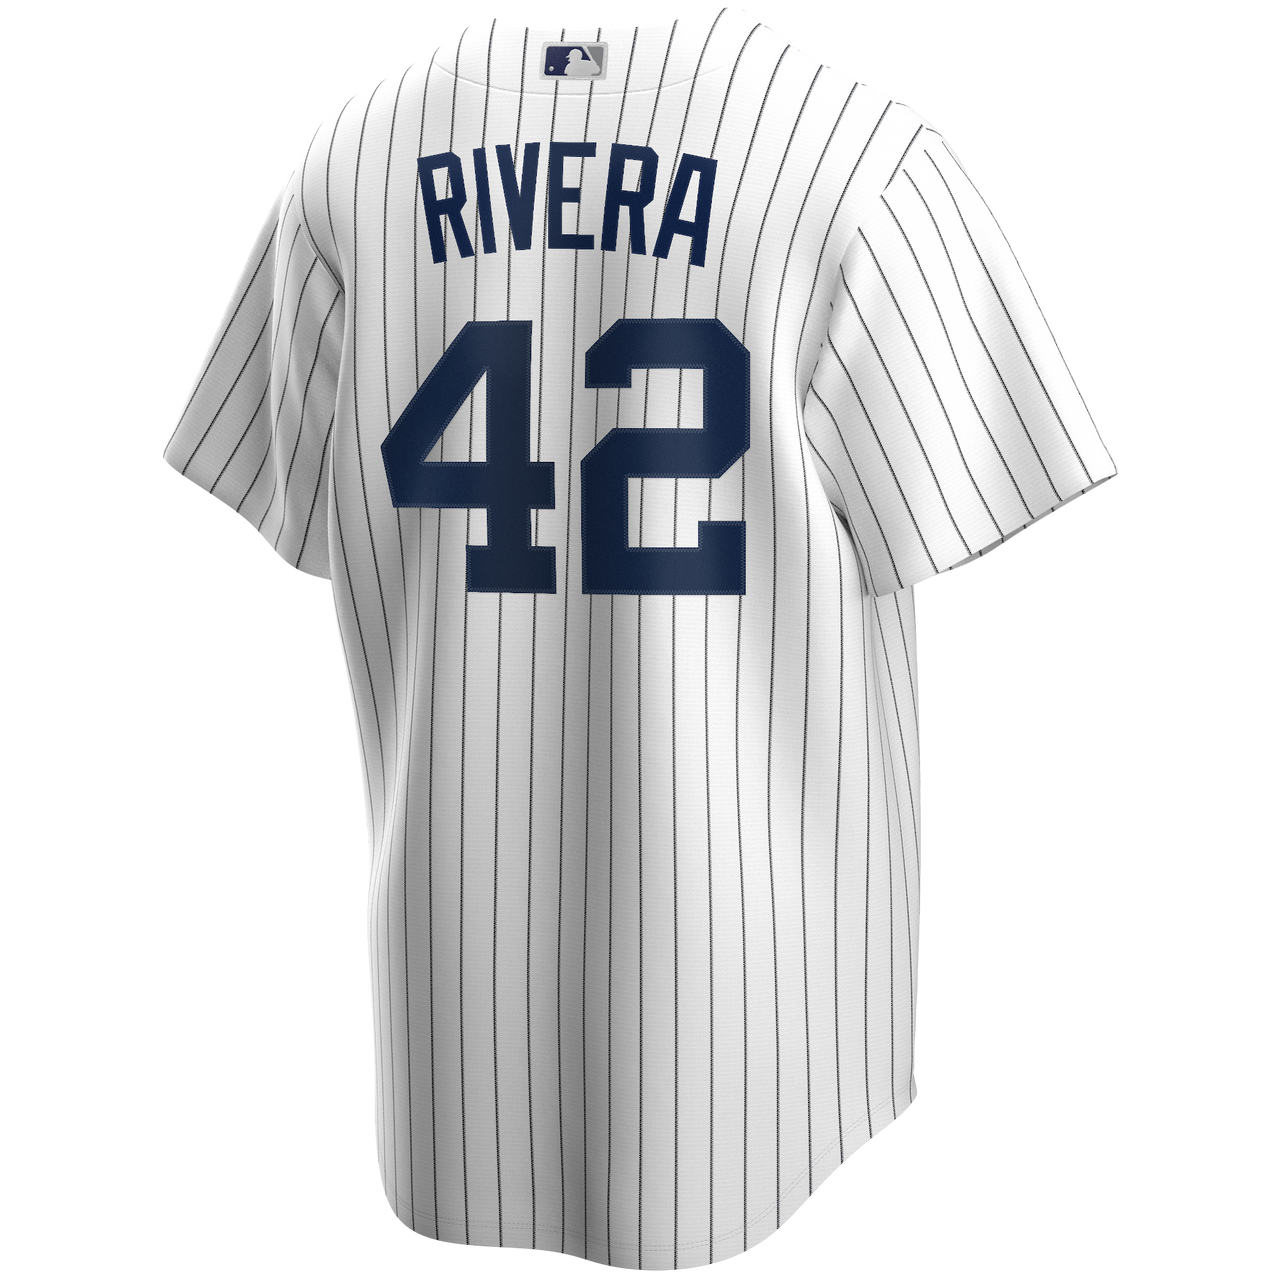 Mariano Rivera Signed New York Yankees Jersey